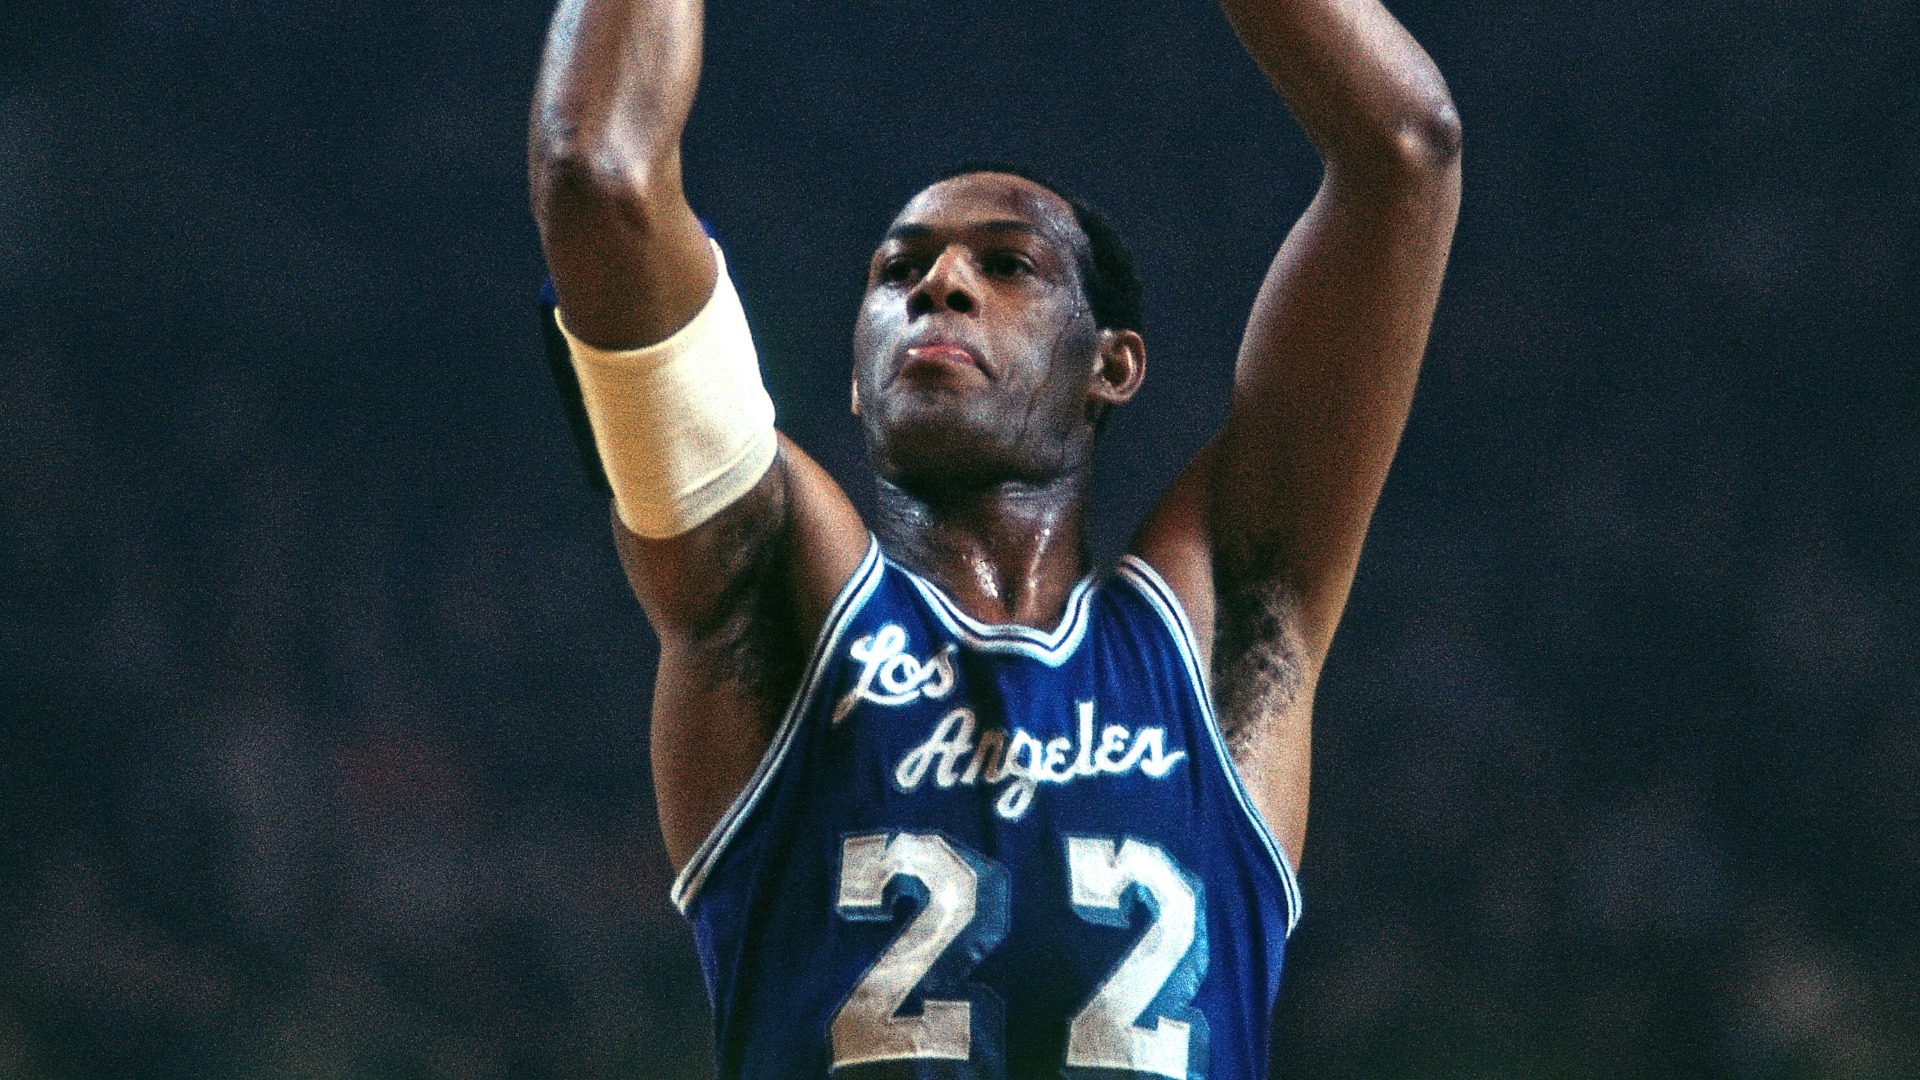 Buy jersey Los Angeles Lakers 1958 - 1960 [Minneapolis]